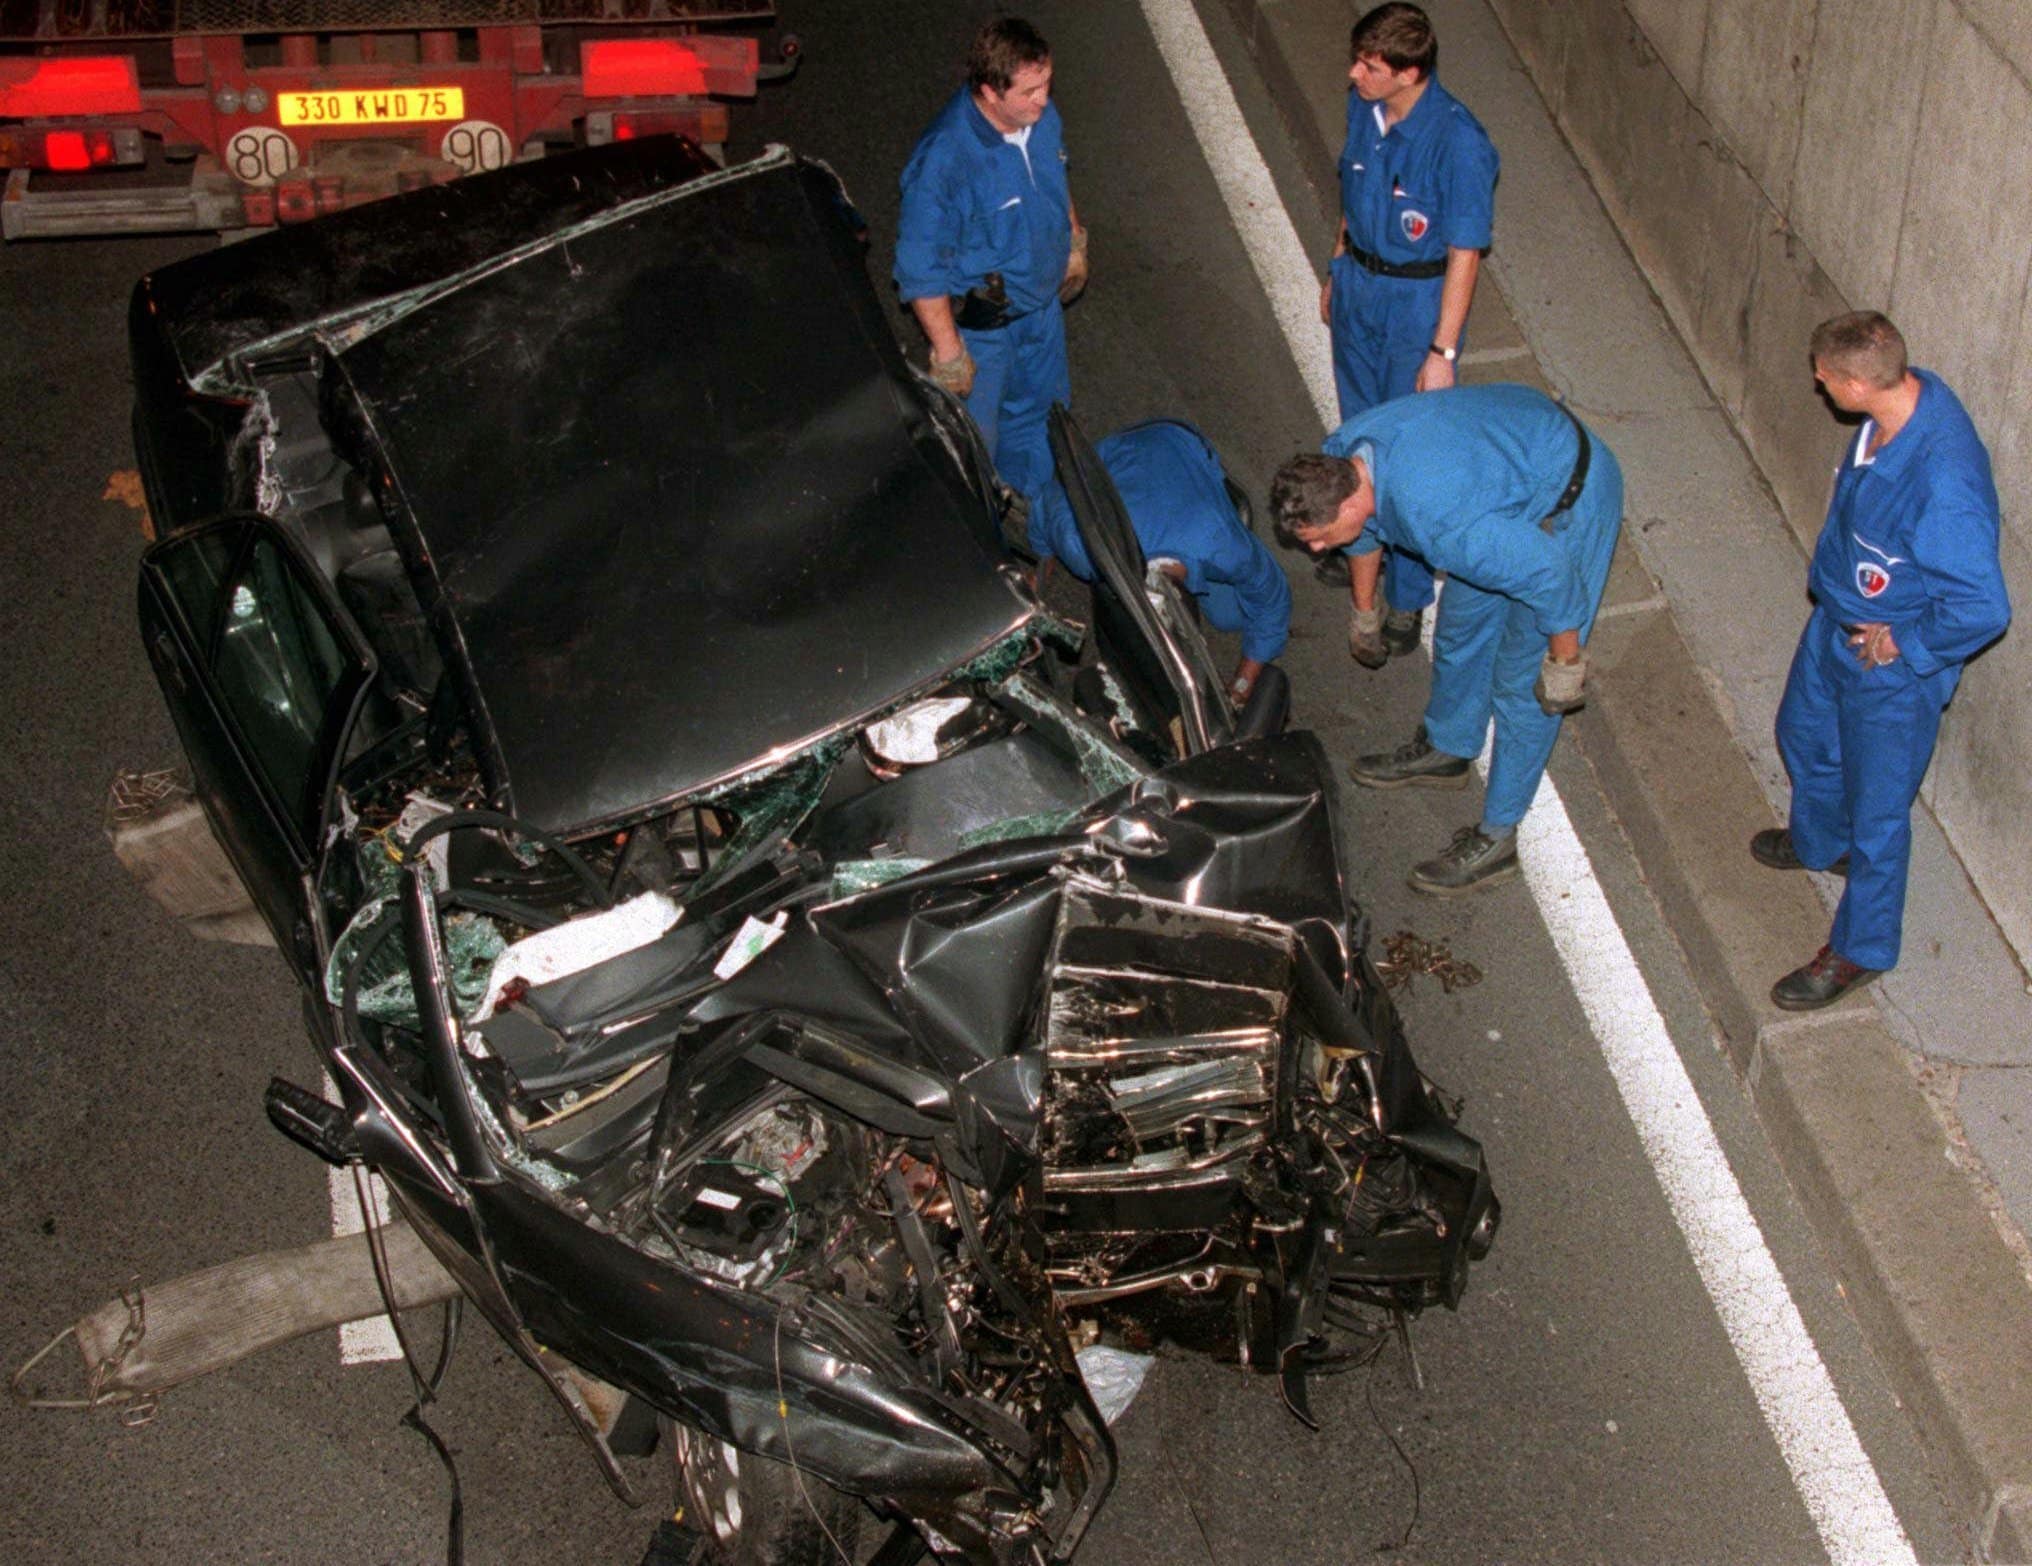 Princess Diana car crash: What happened in Paris in August 1997? – The Sun | The Sun